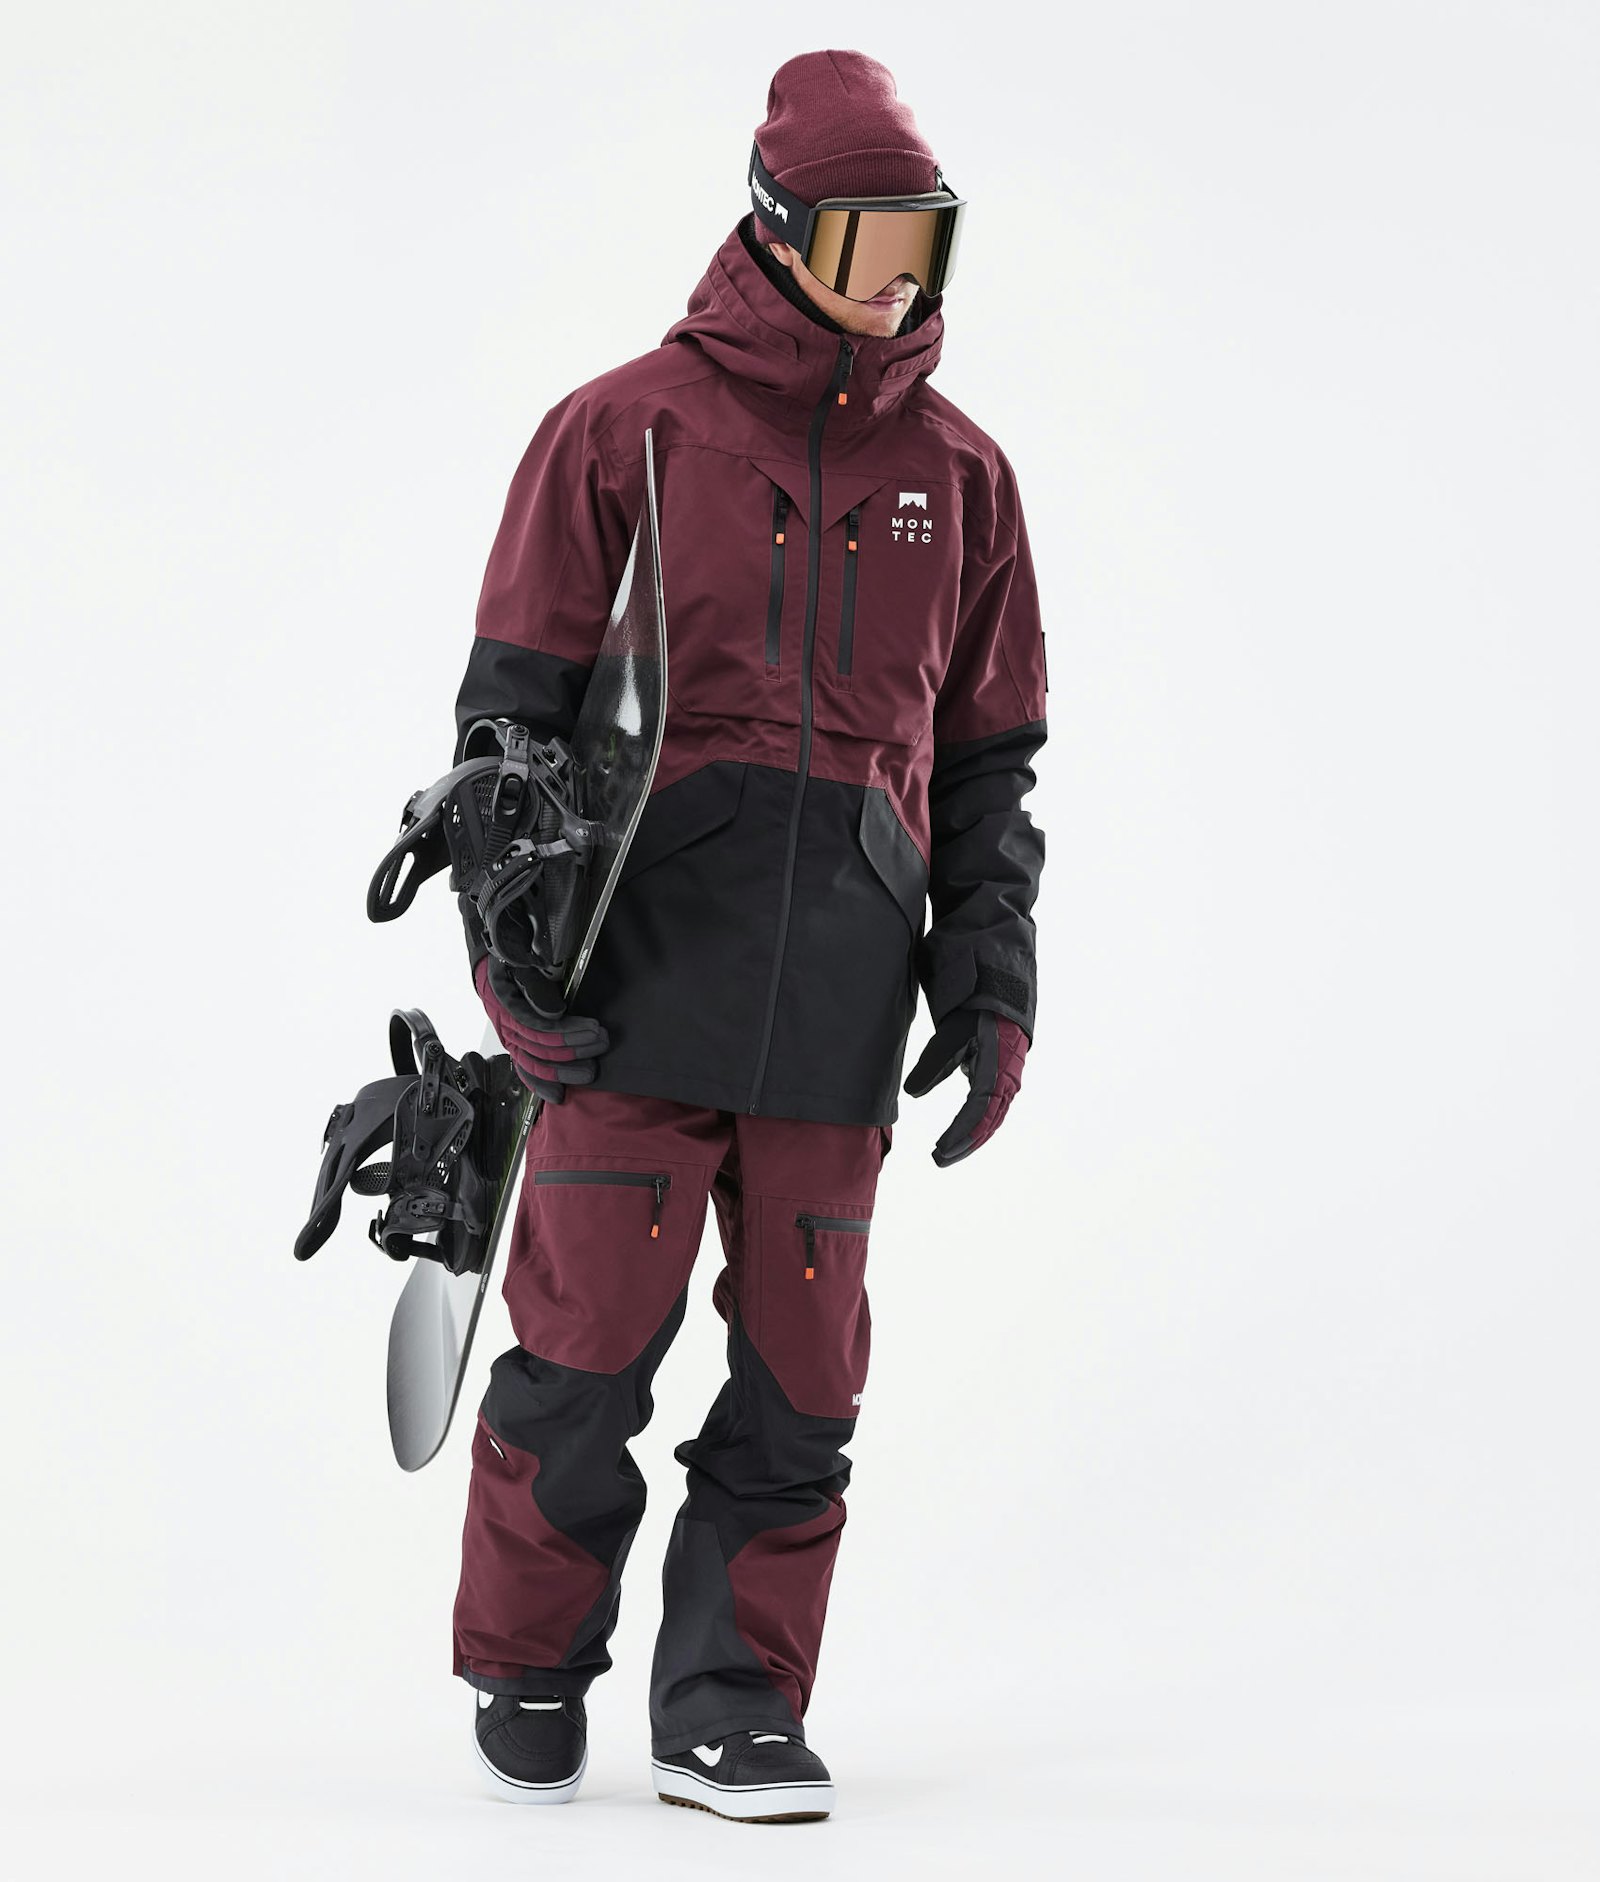 Moss 2021 Snowboardjakke Herre Burgundy/Black